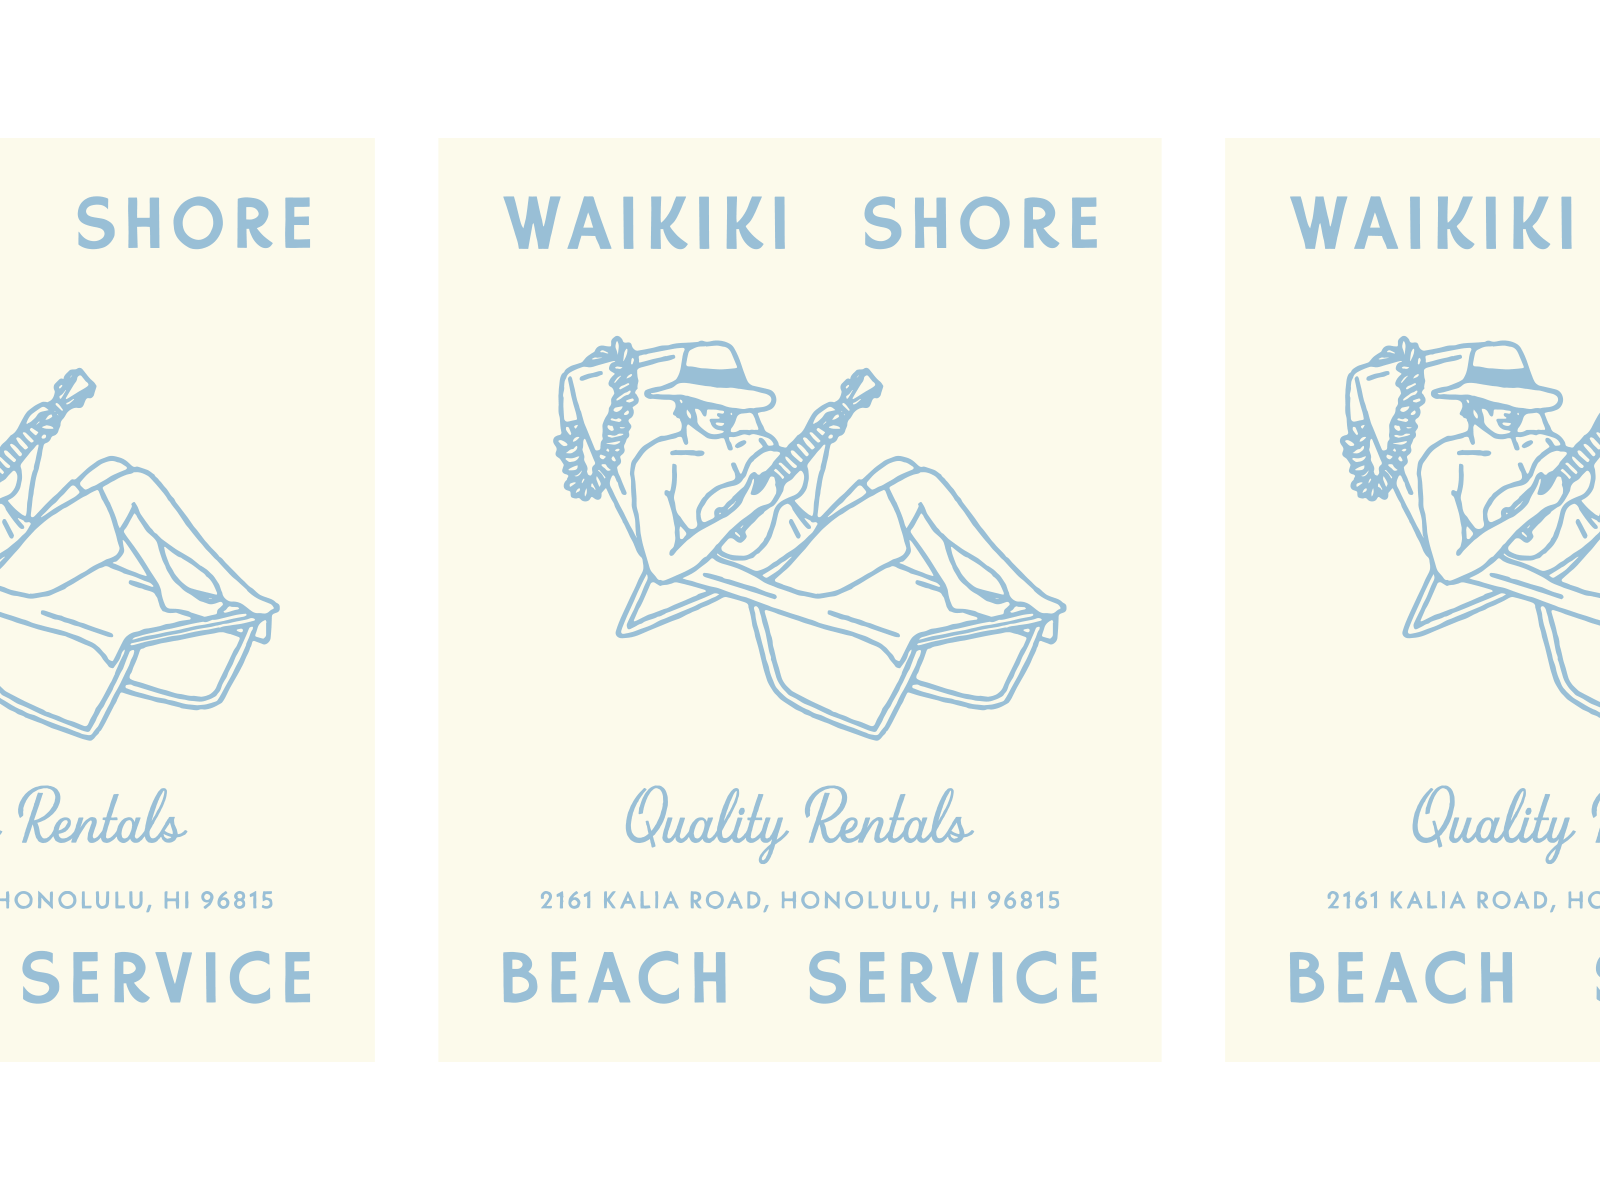 Waikiki Shore Beach Service - Illustrated posters